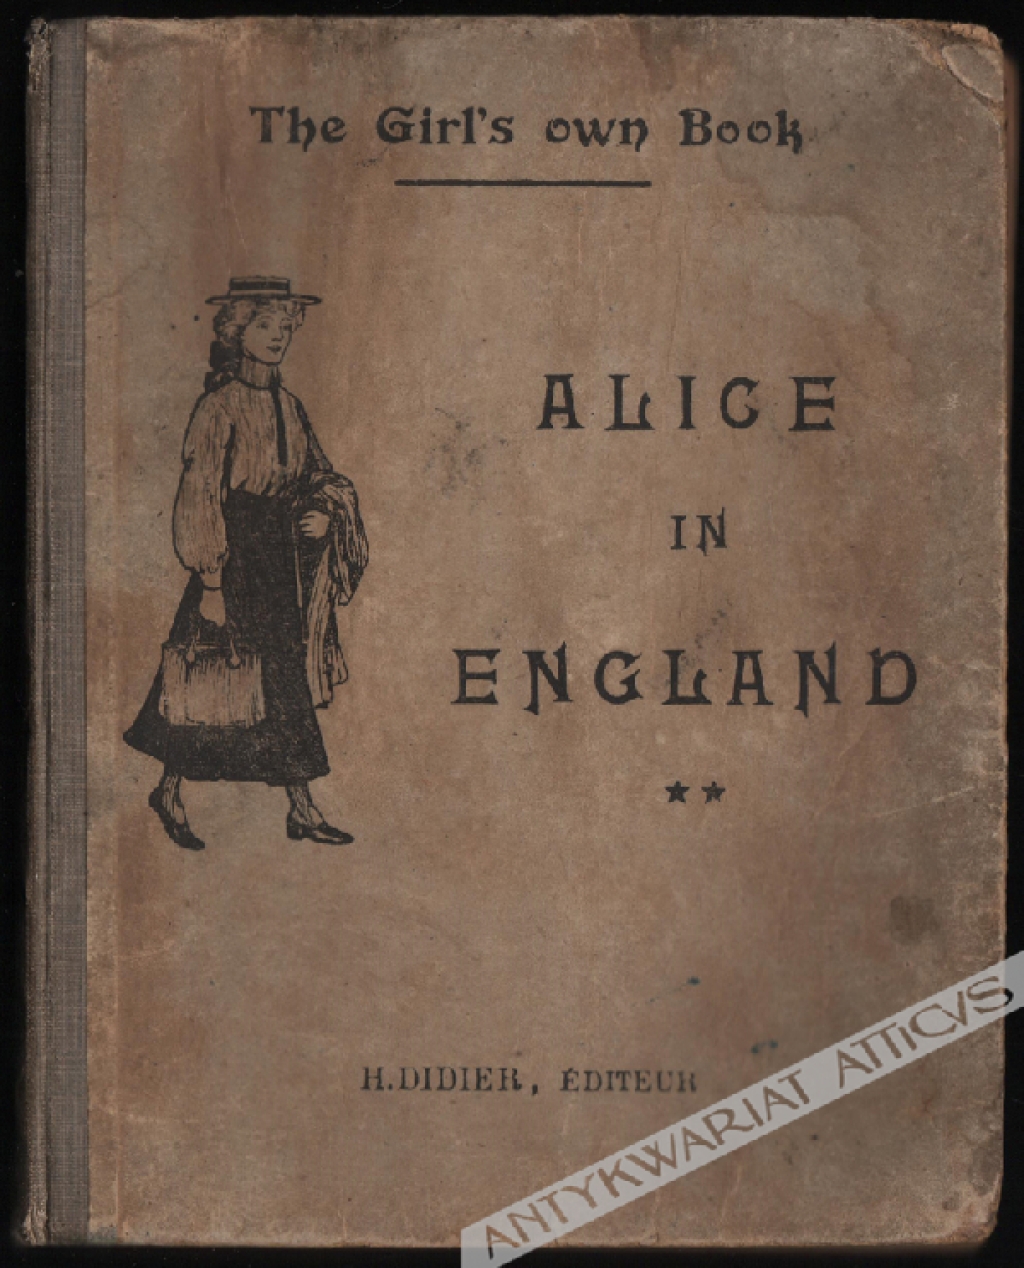 The Girl's Own Book. Alice in England (Classes de seconde année)